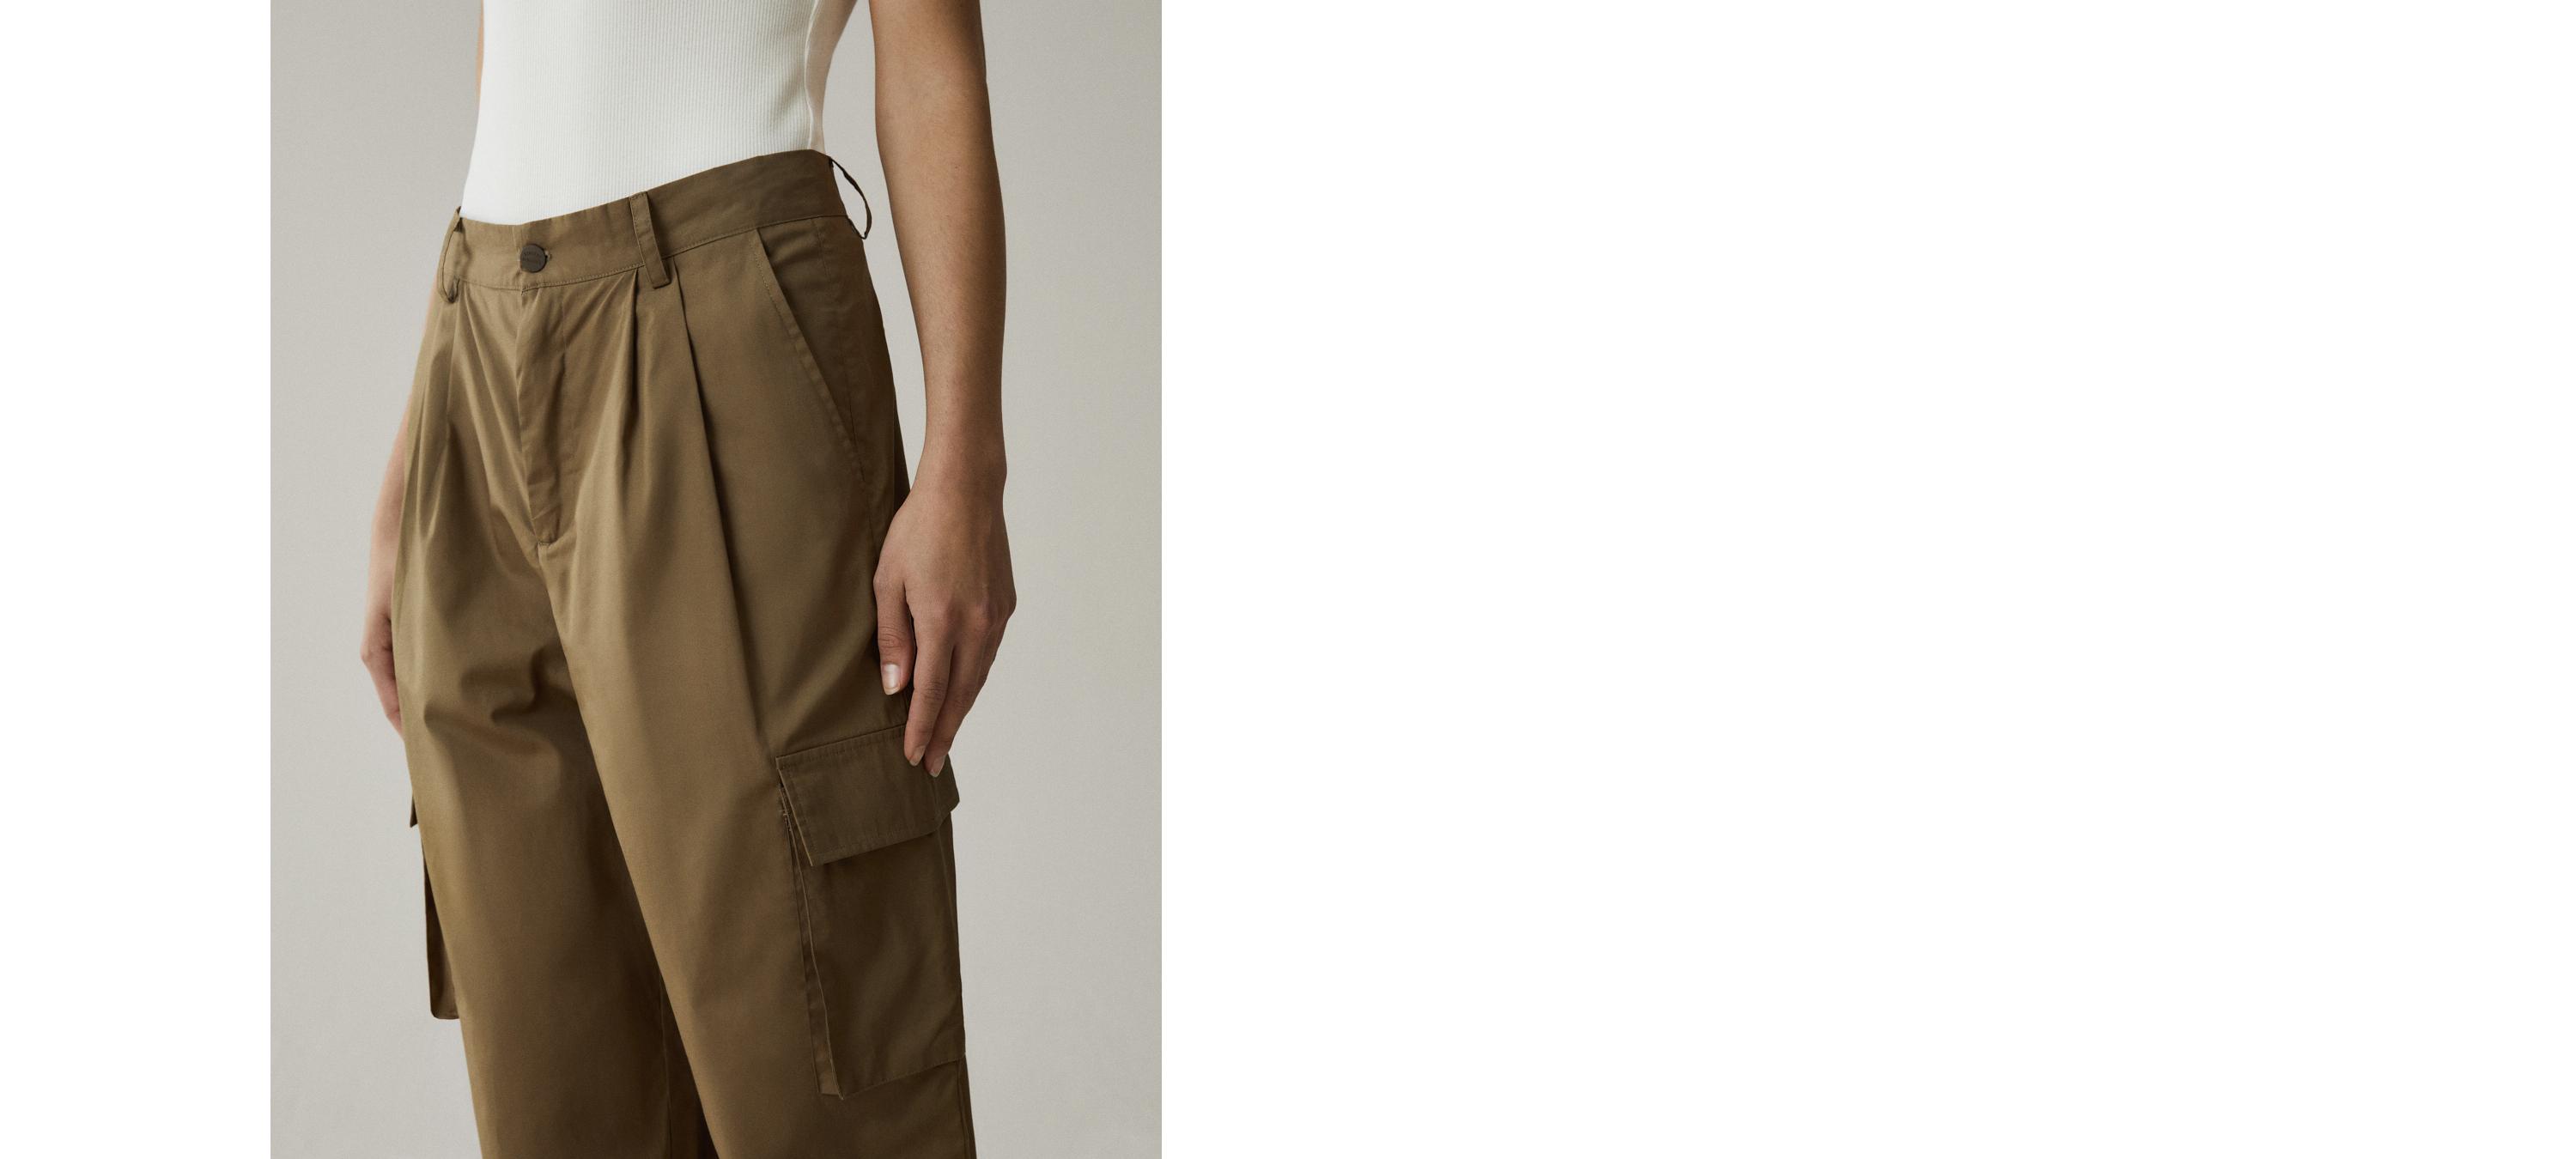 34 Comfortable Pieces Under $40 Going Viral On Amazon | Pants women  fashion, Cotton pants women, Womens pants design